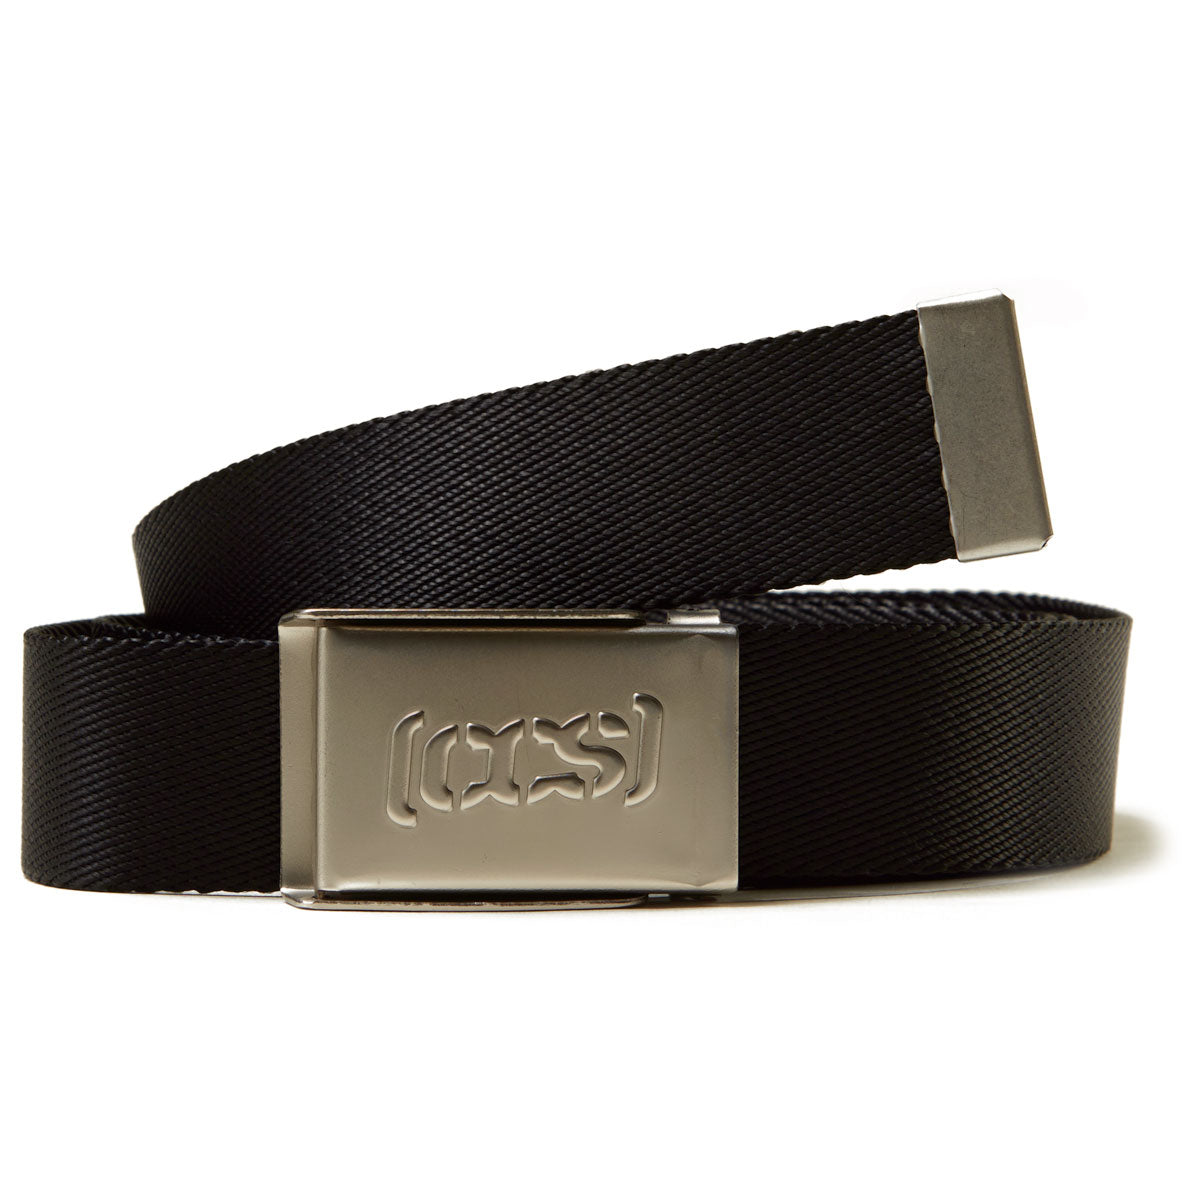 CCS Silver Logo Buckle Belt - Black image 1